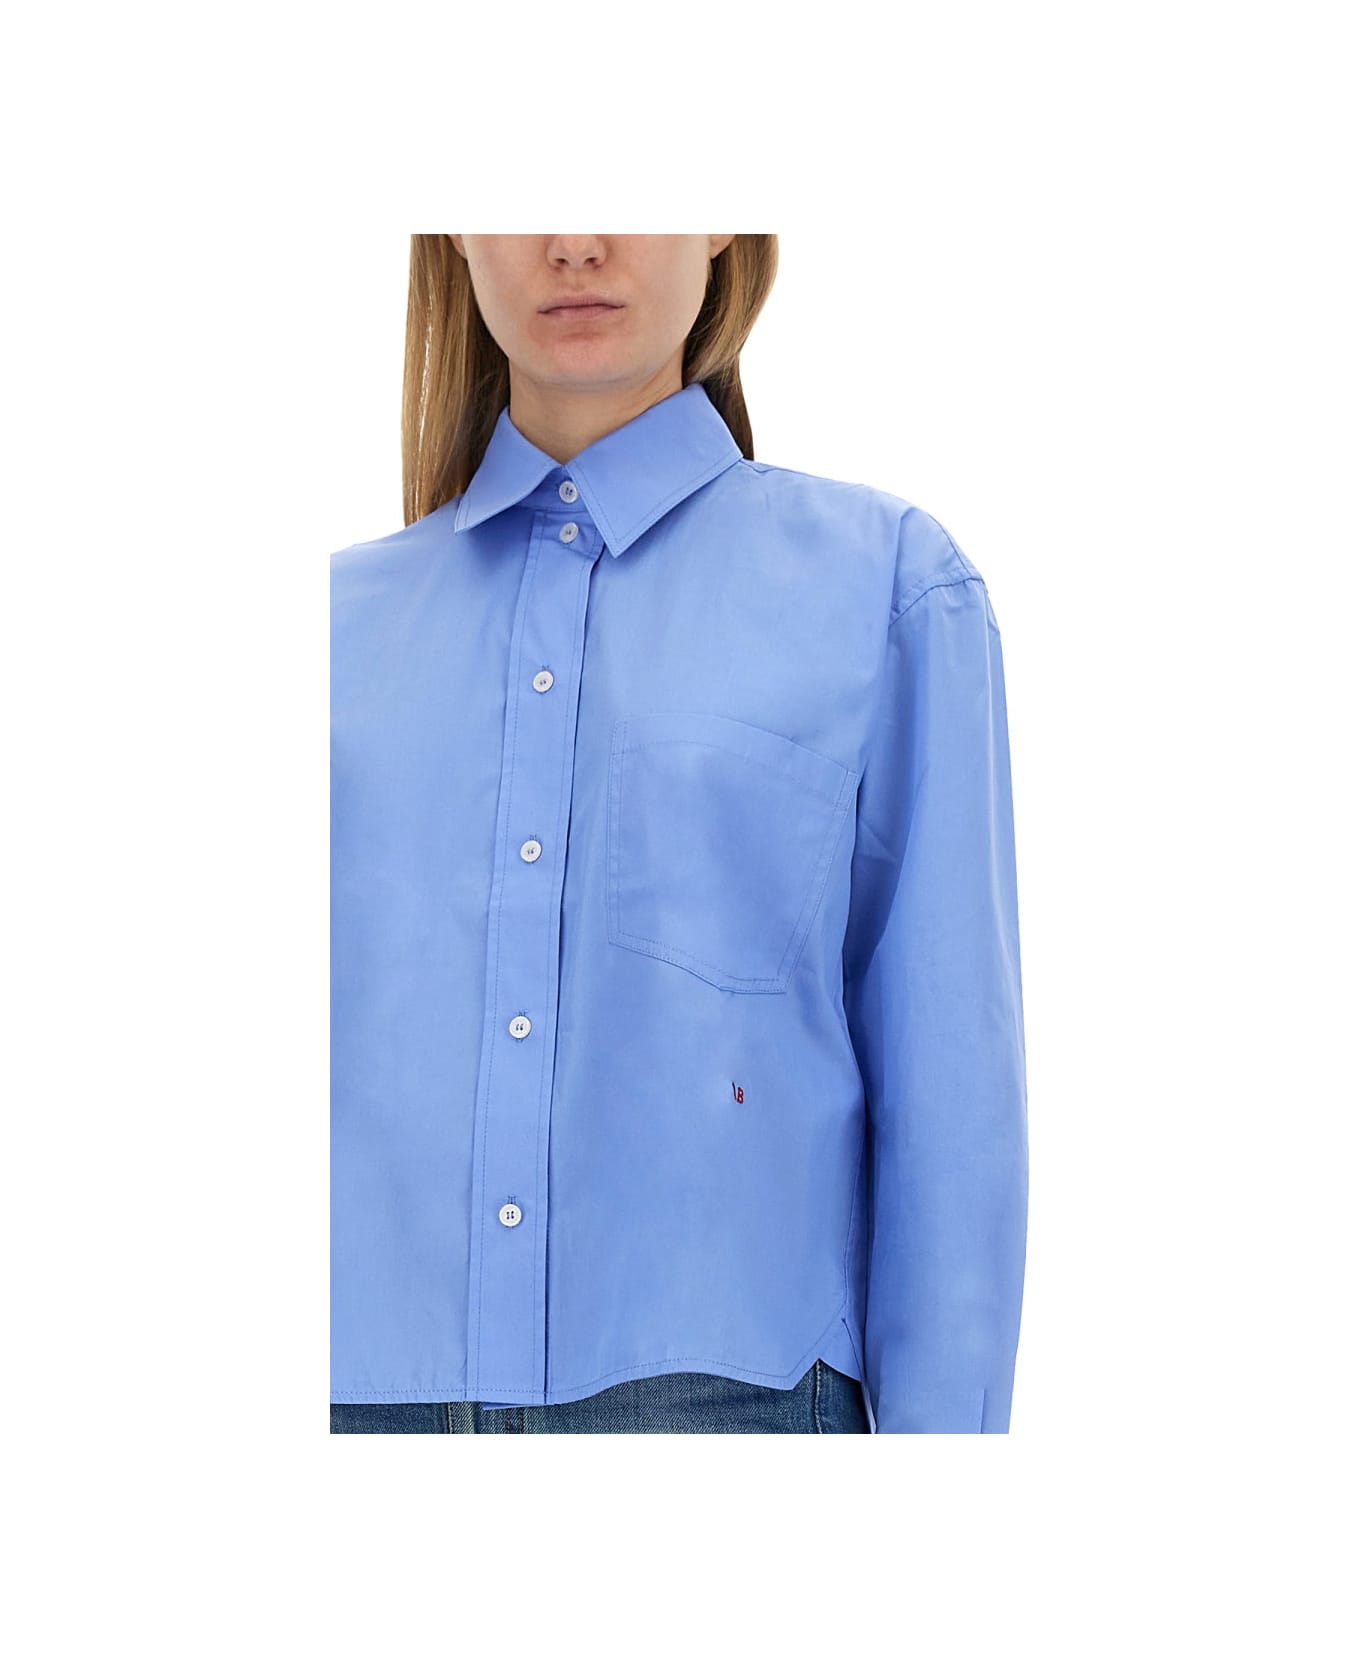 Victoria Beckham Cotton Shirt - BABY BLUE